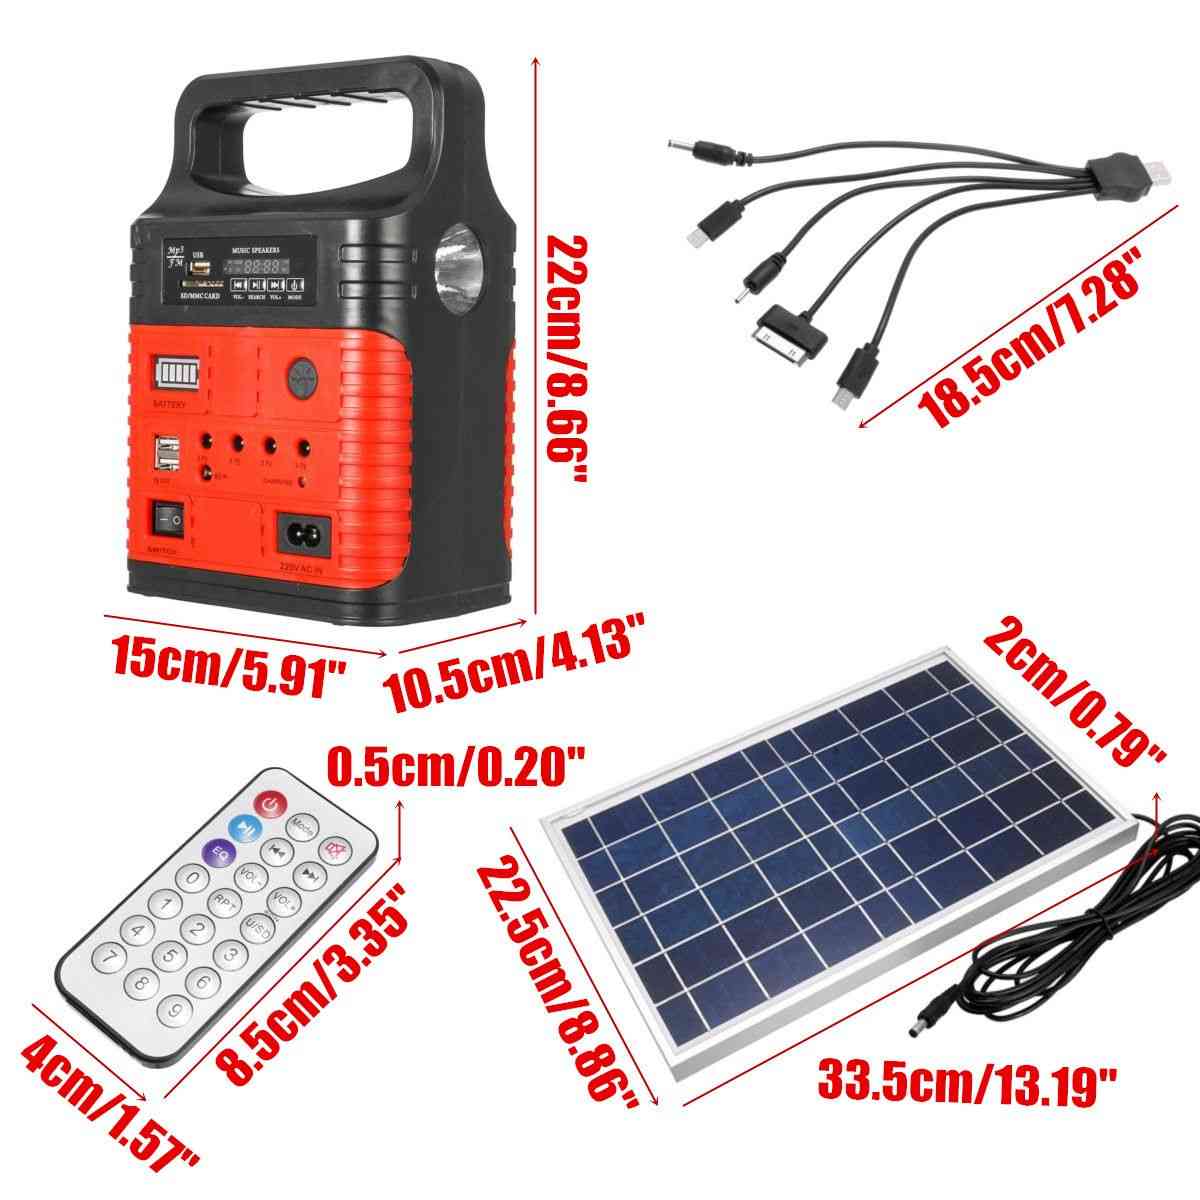 Emergency 3 Led Solar Lighting System Kit - Outdoor Power Supply Mp3 Radio Flashlig